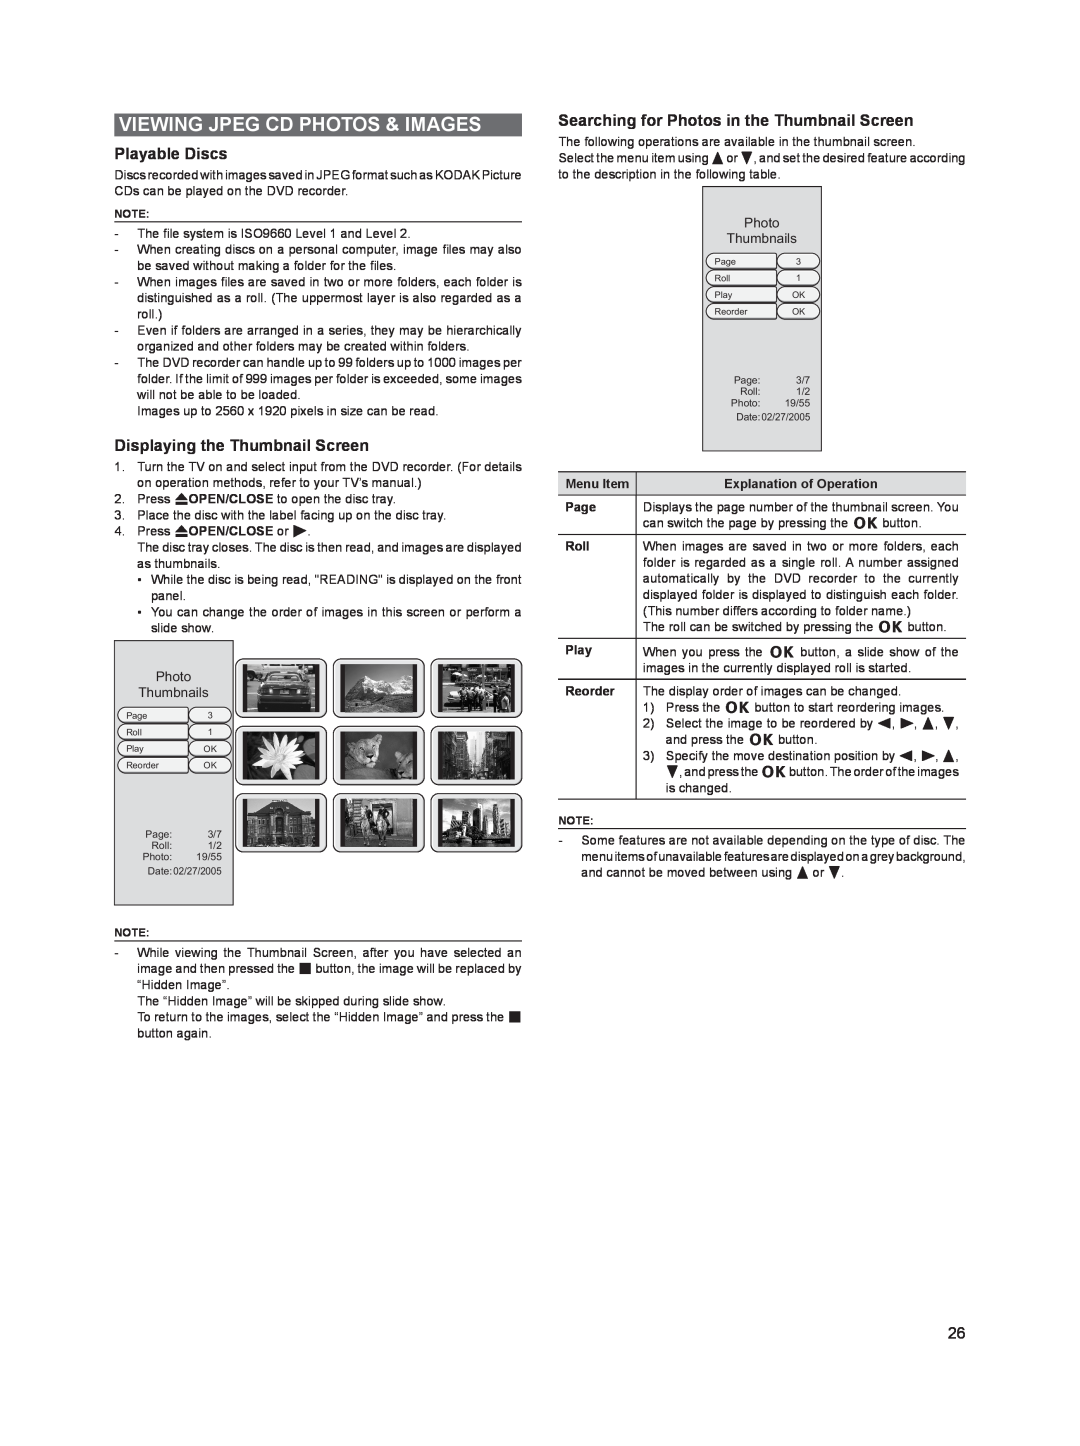 Sanyo DVR-HT120 instruction manual Viewing Jpeg Cd Photos & Images, Displaying the Thumbnail Screen, Playable Discs 